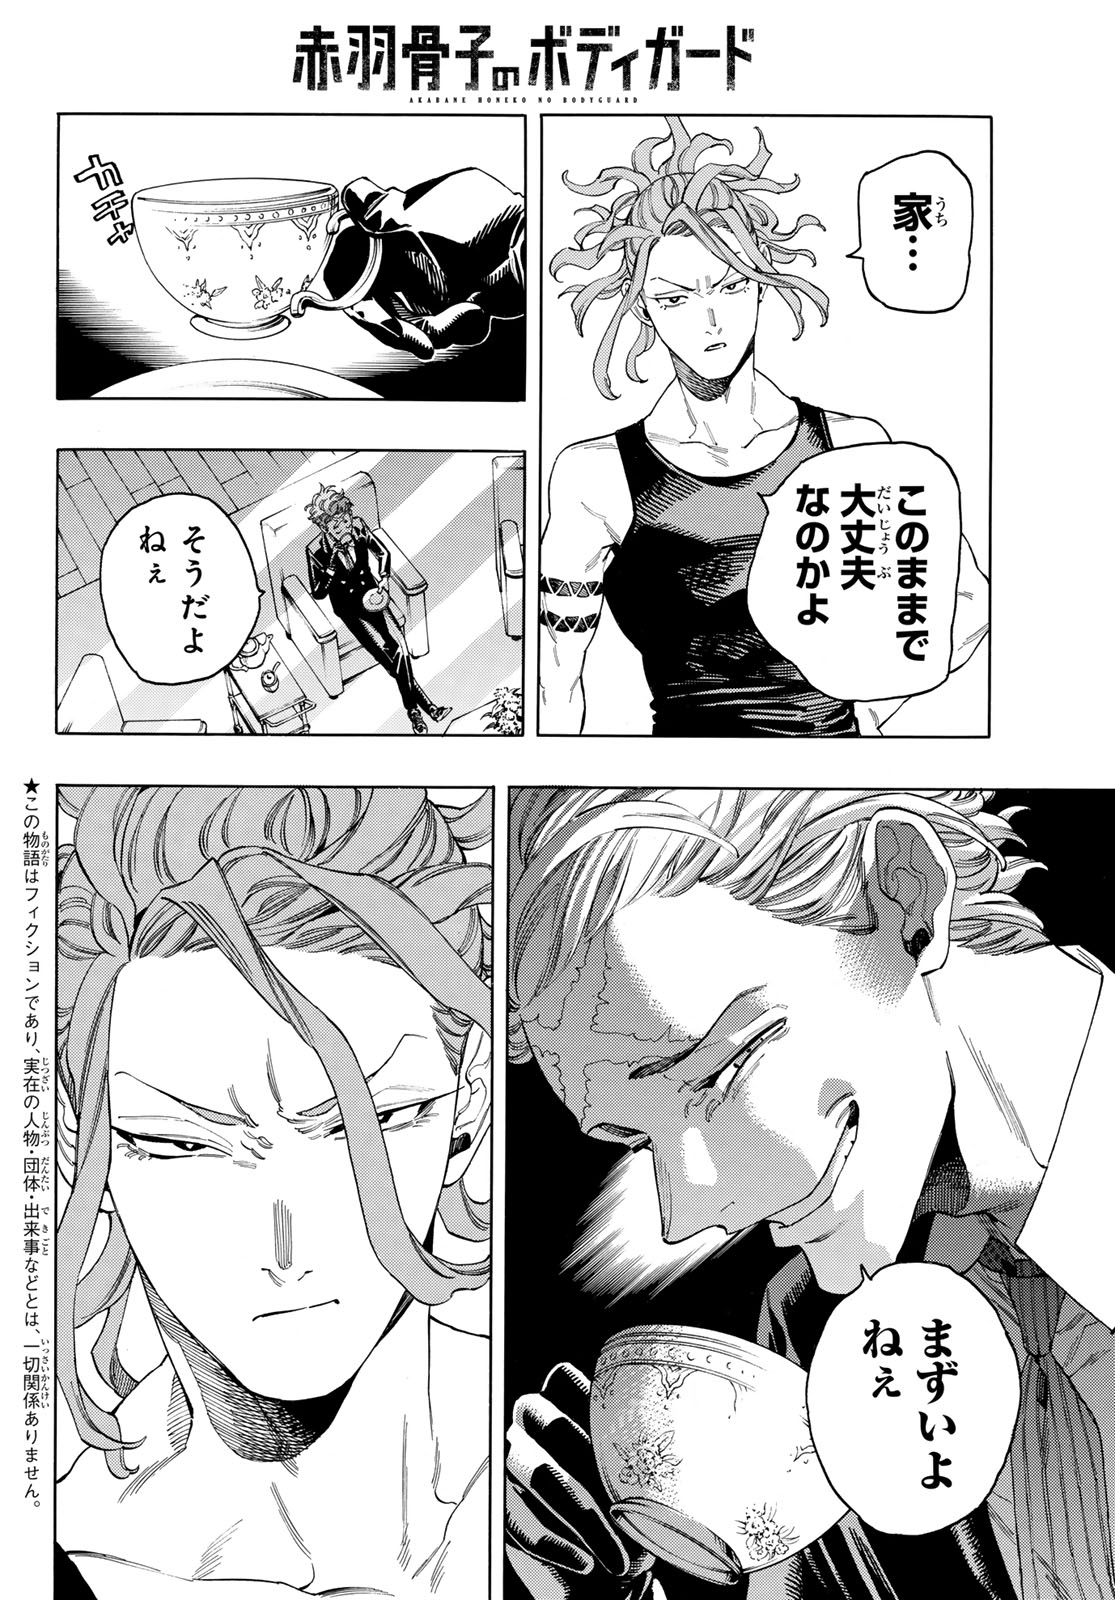 Akabane Honeko no Bodyguard - Chapter 83 - Page 2